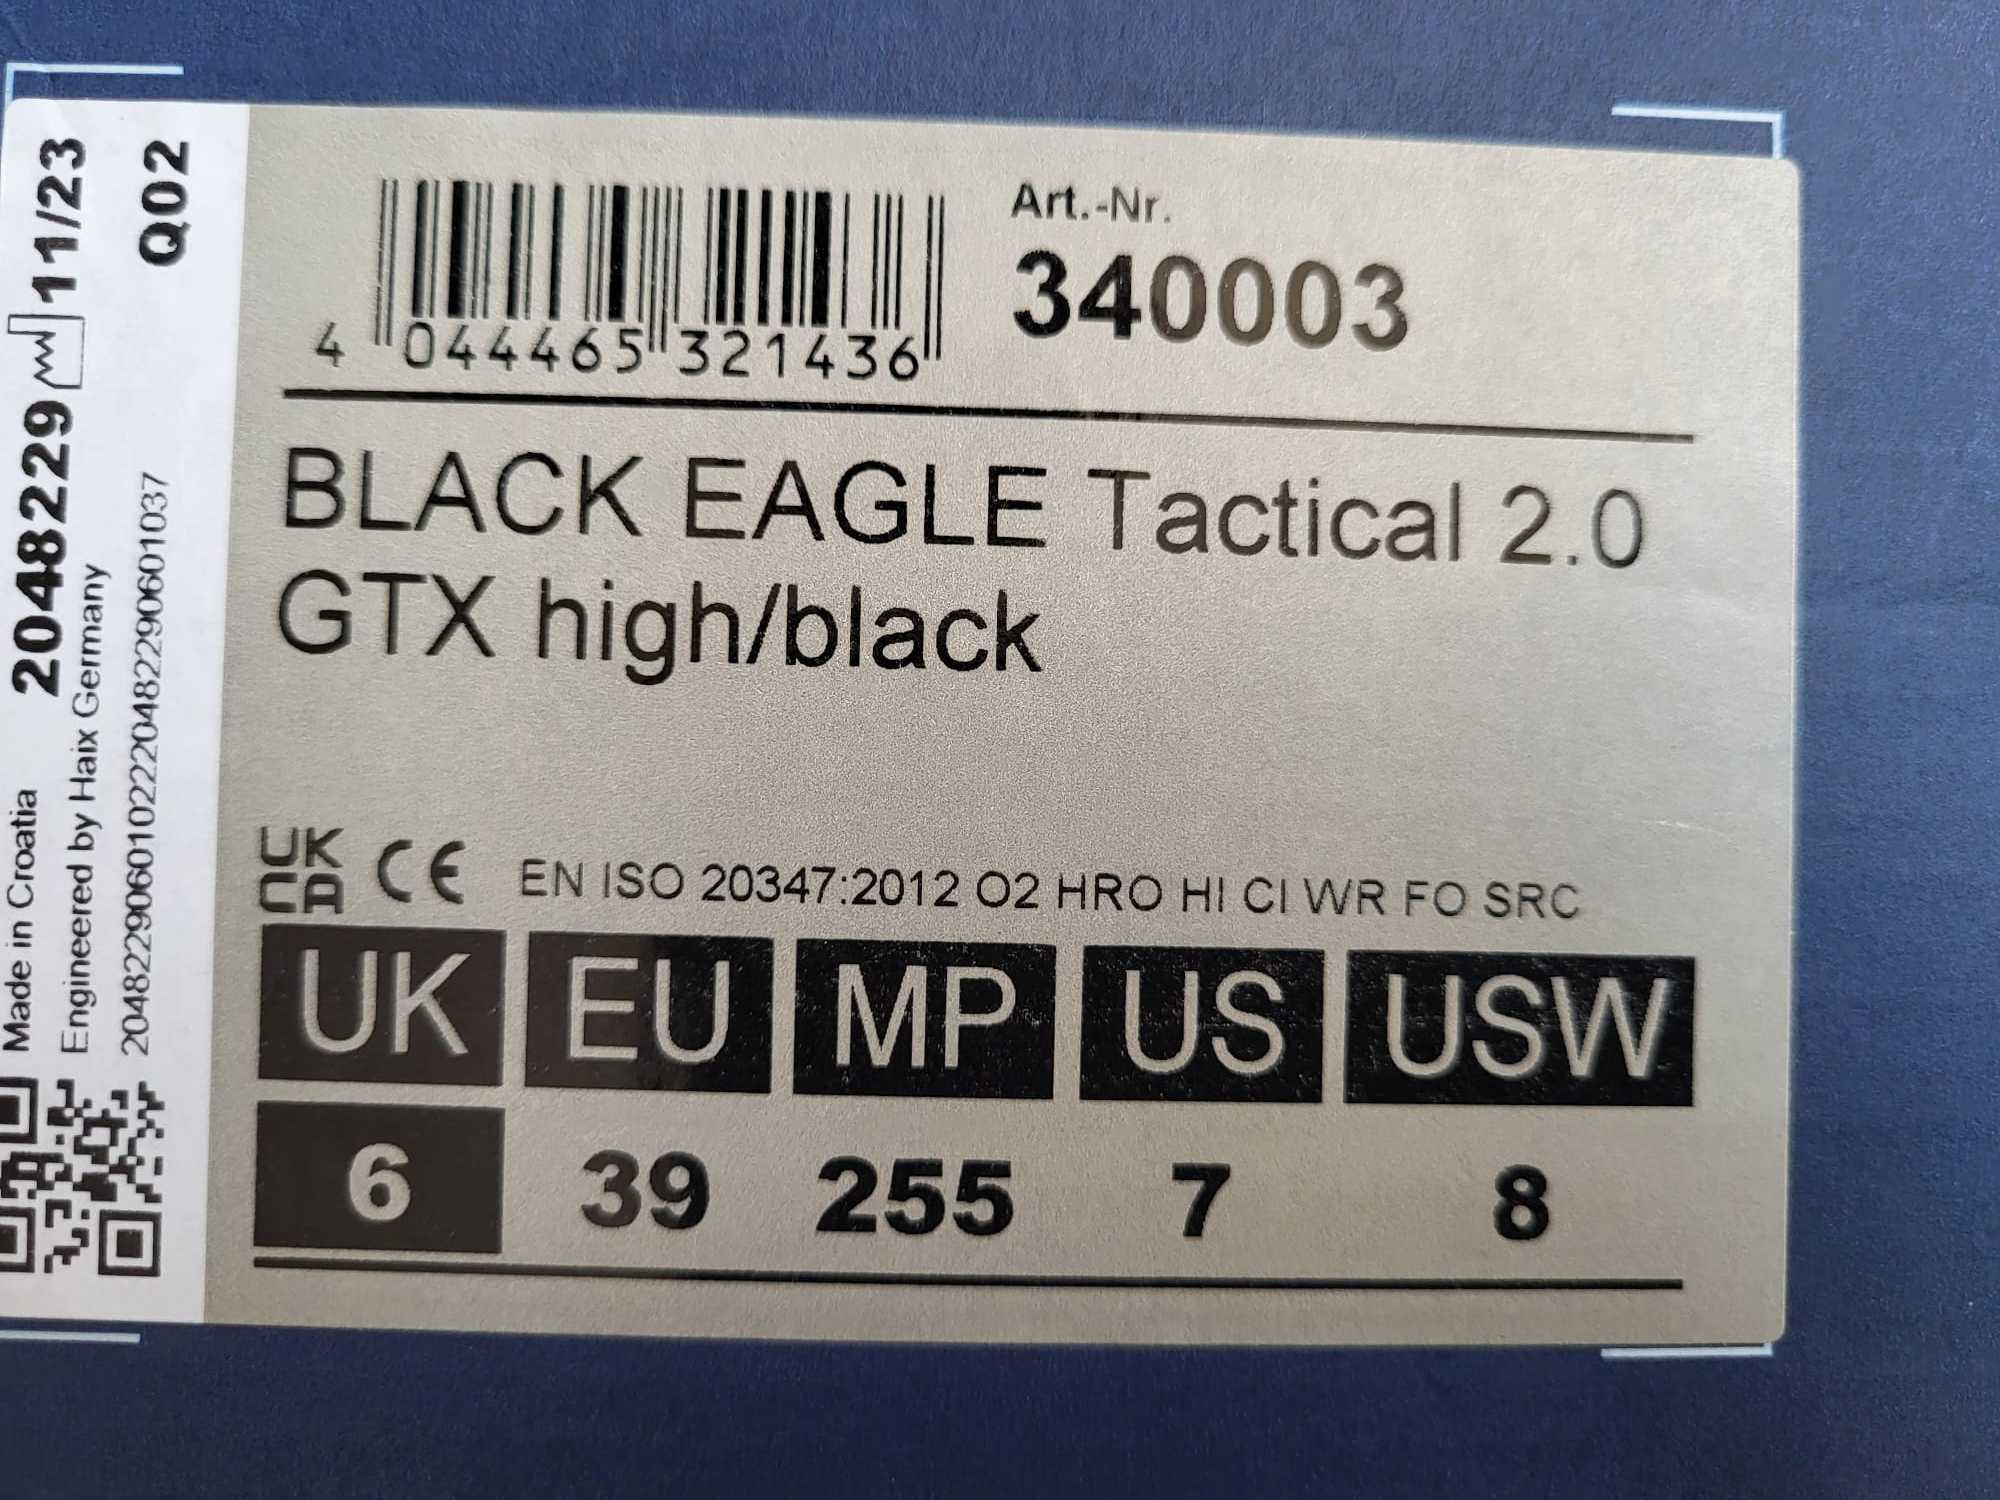 Buty wojskowe HAiX Black Eagle Tactical 2.0 GTX high/black Rozmiar 39